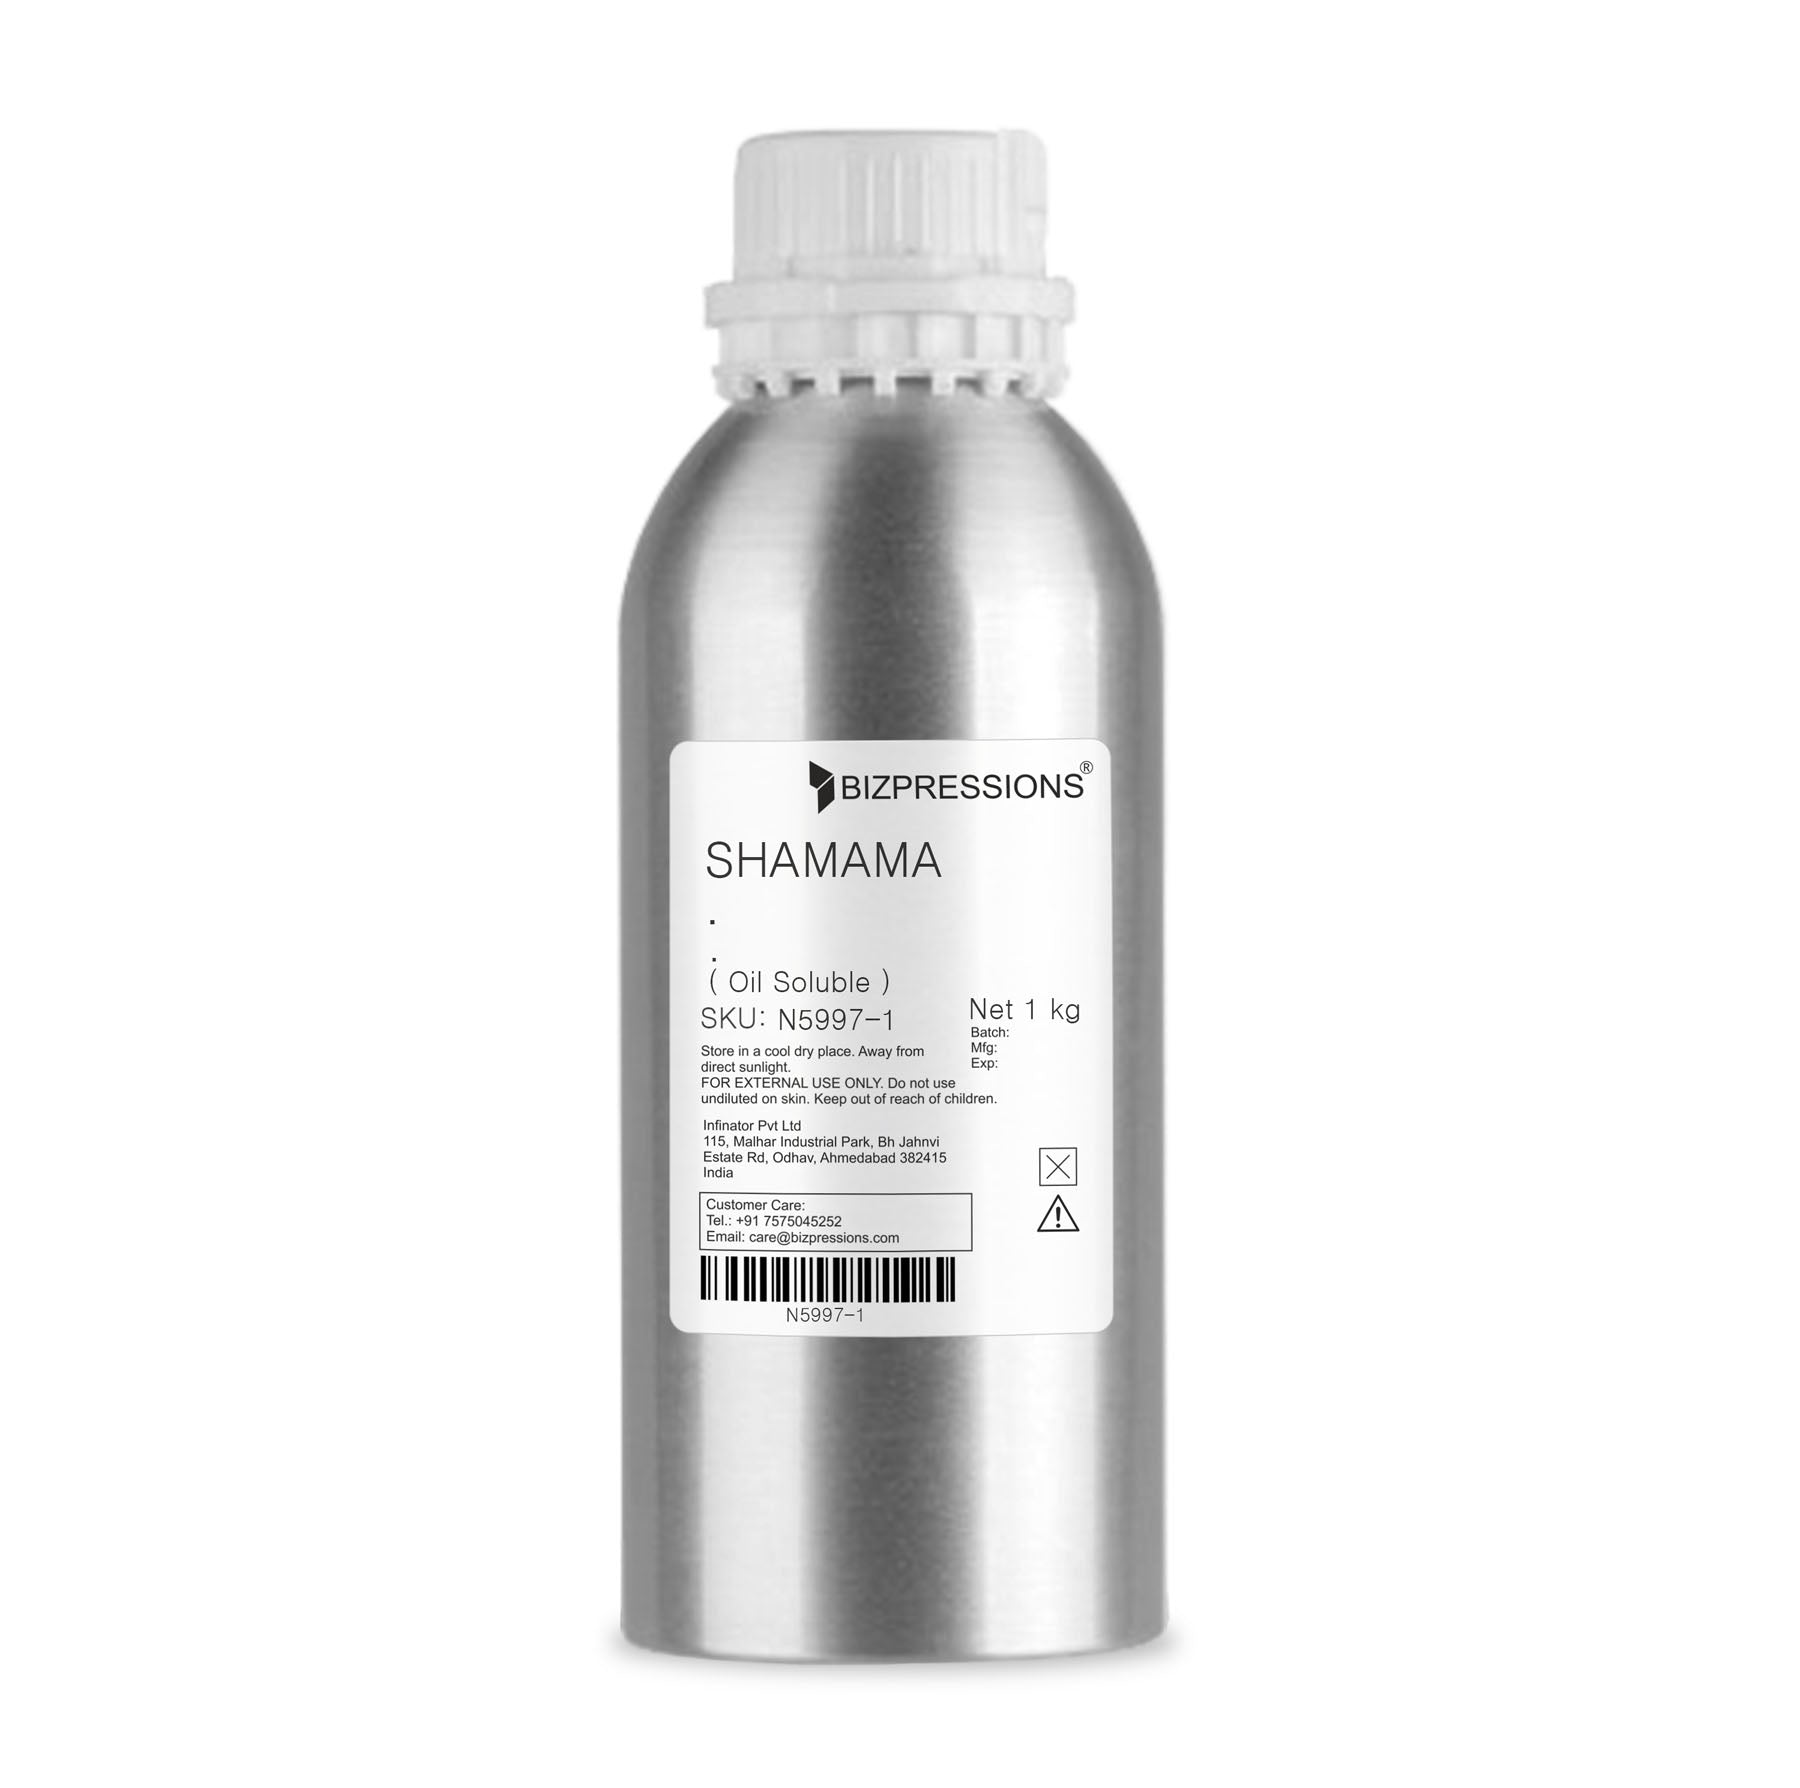 SHAMAMA - Fragrance ( Oil Soluble ) - 1 kg